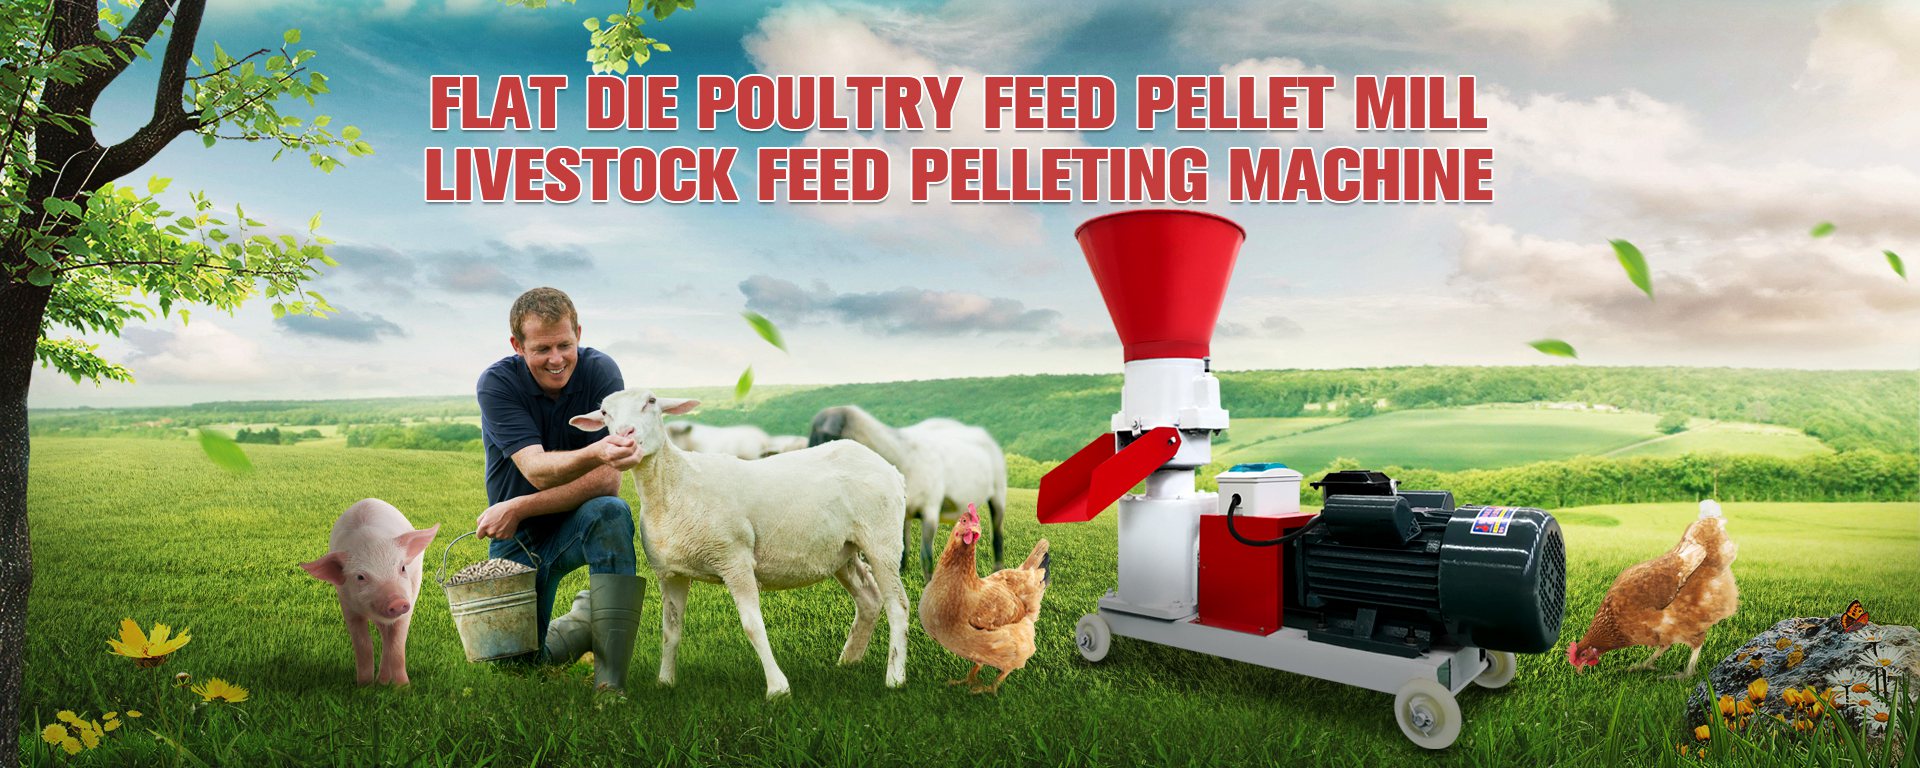 Flat die poultry feed pellet mill